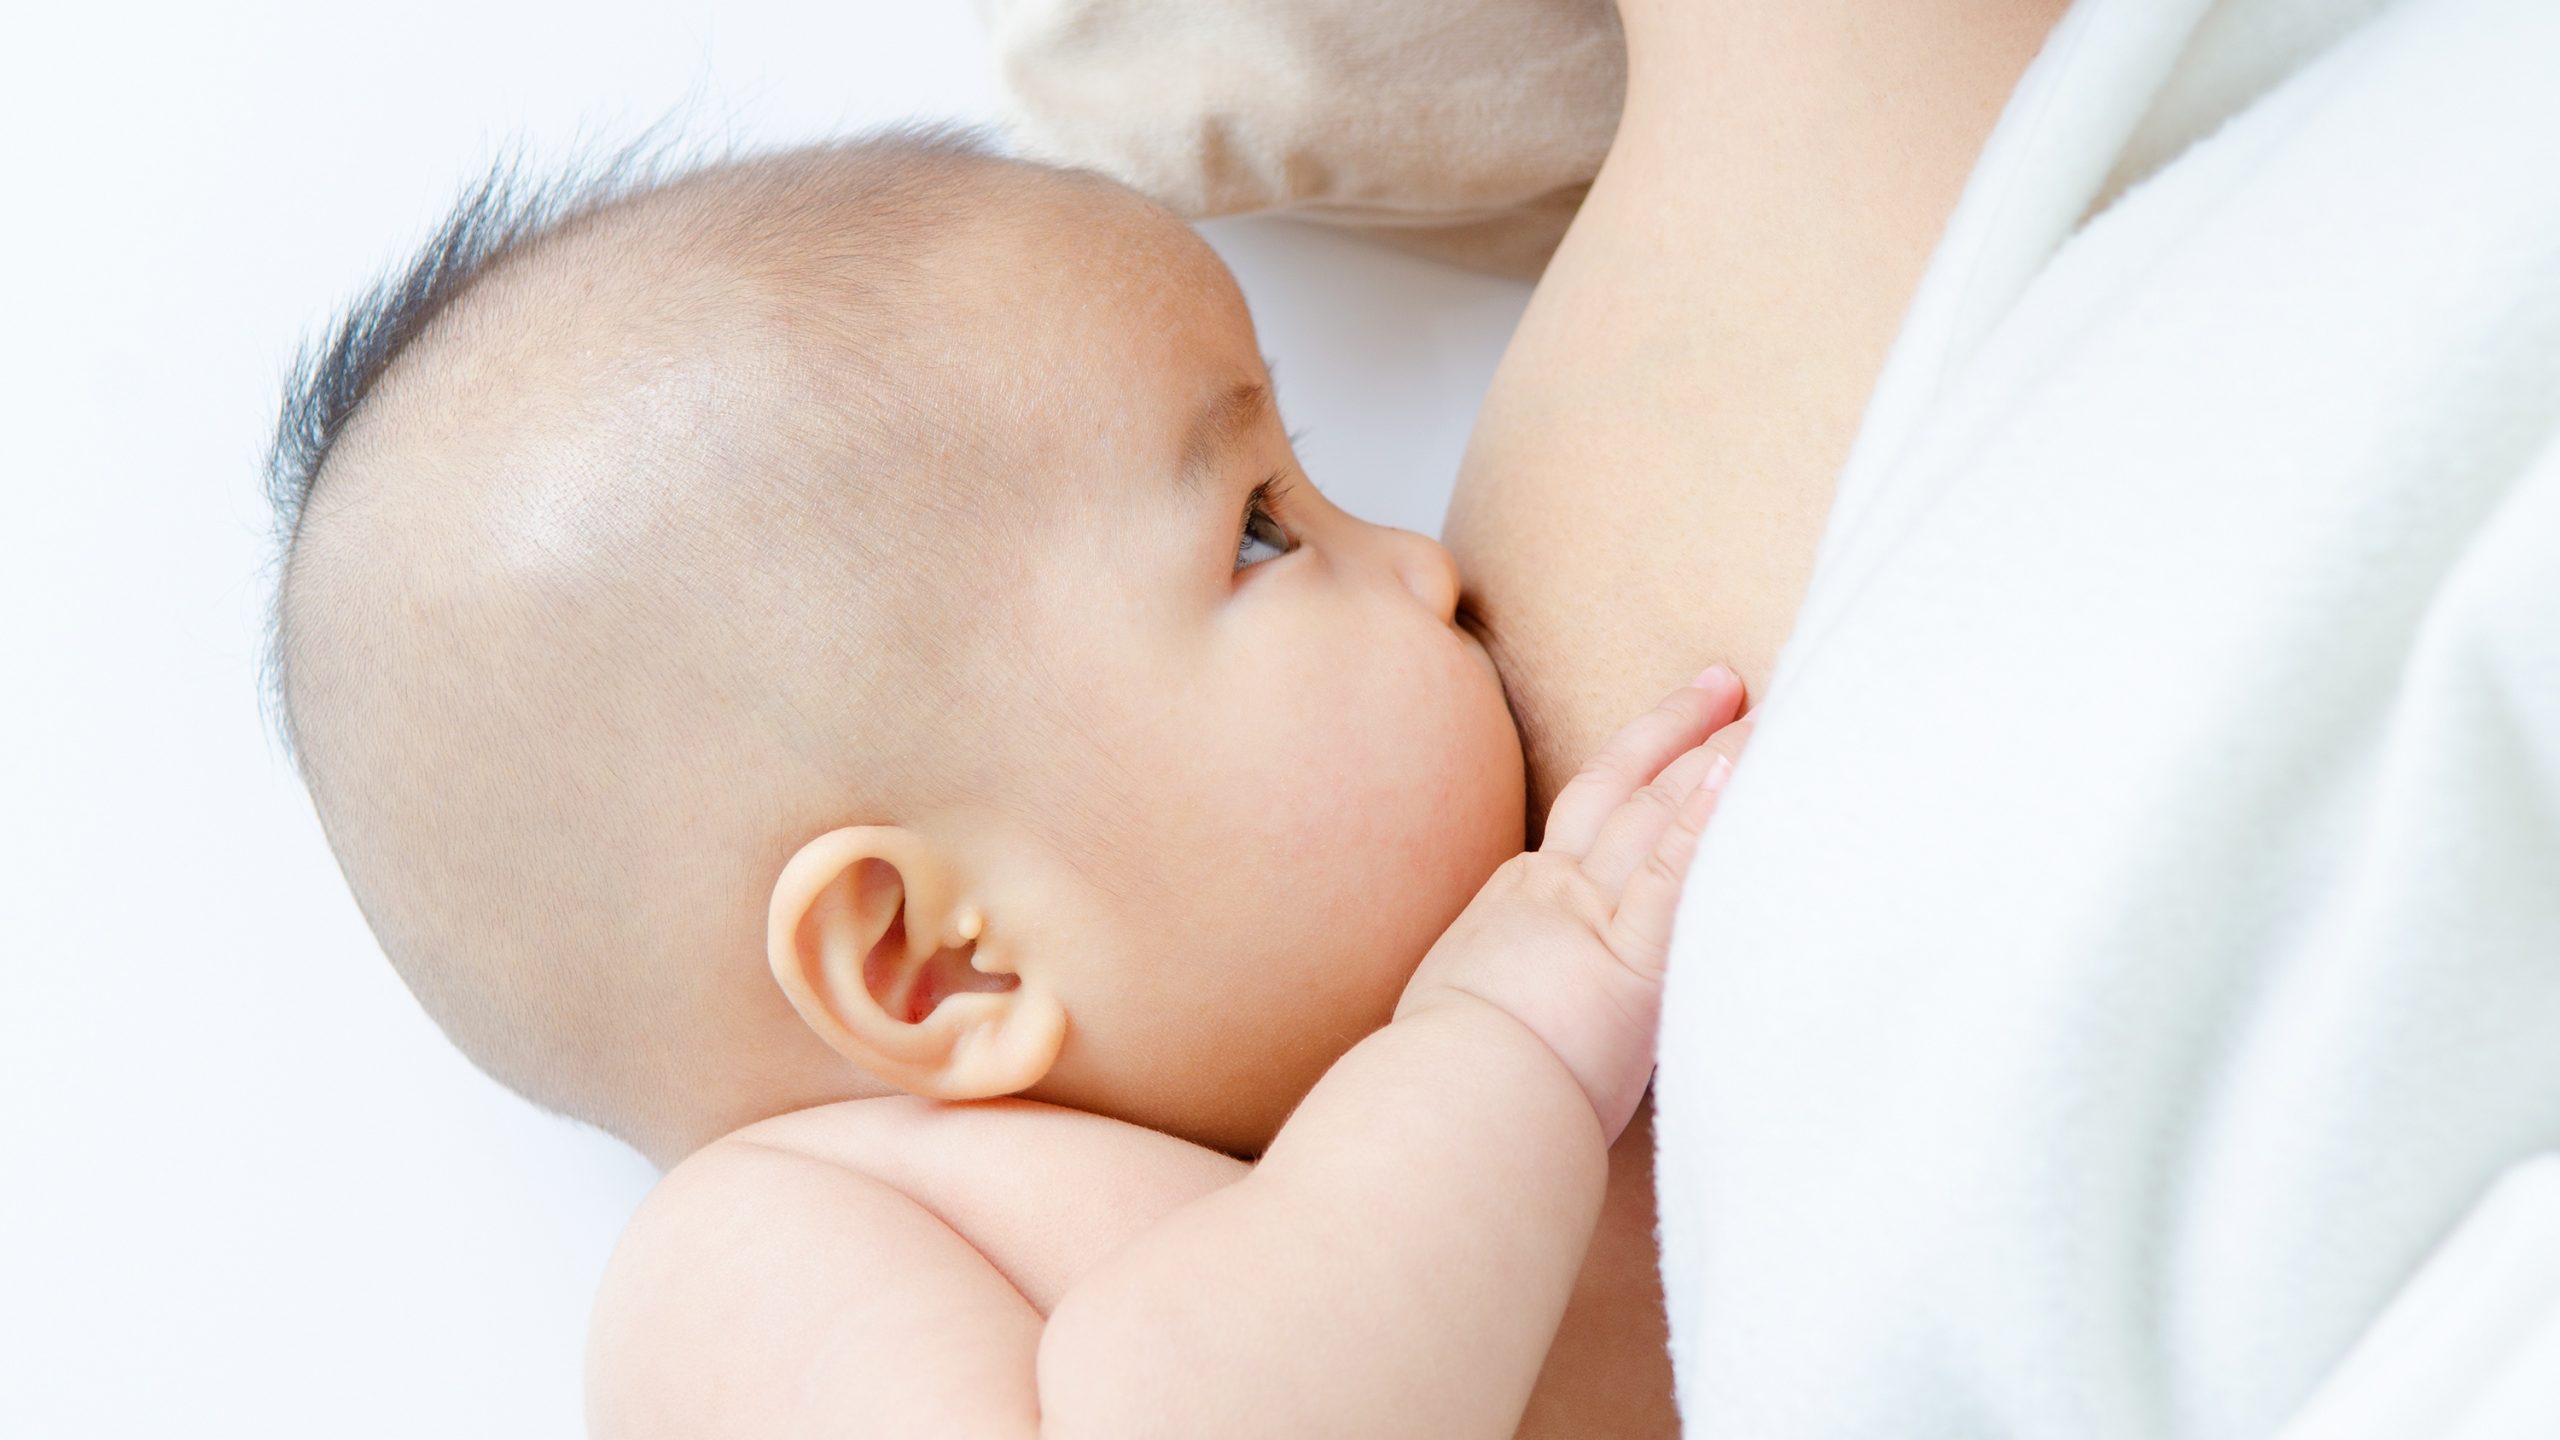 Medela nursing sleep bra, 兒童＆孕婦用品, 護理及餵哺, 護理及餵哺